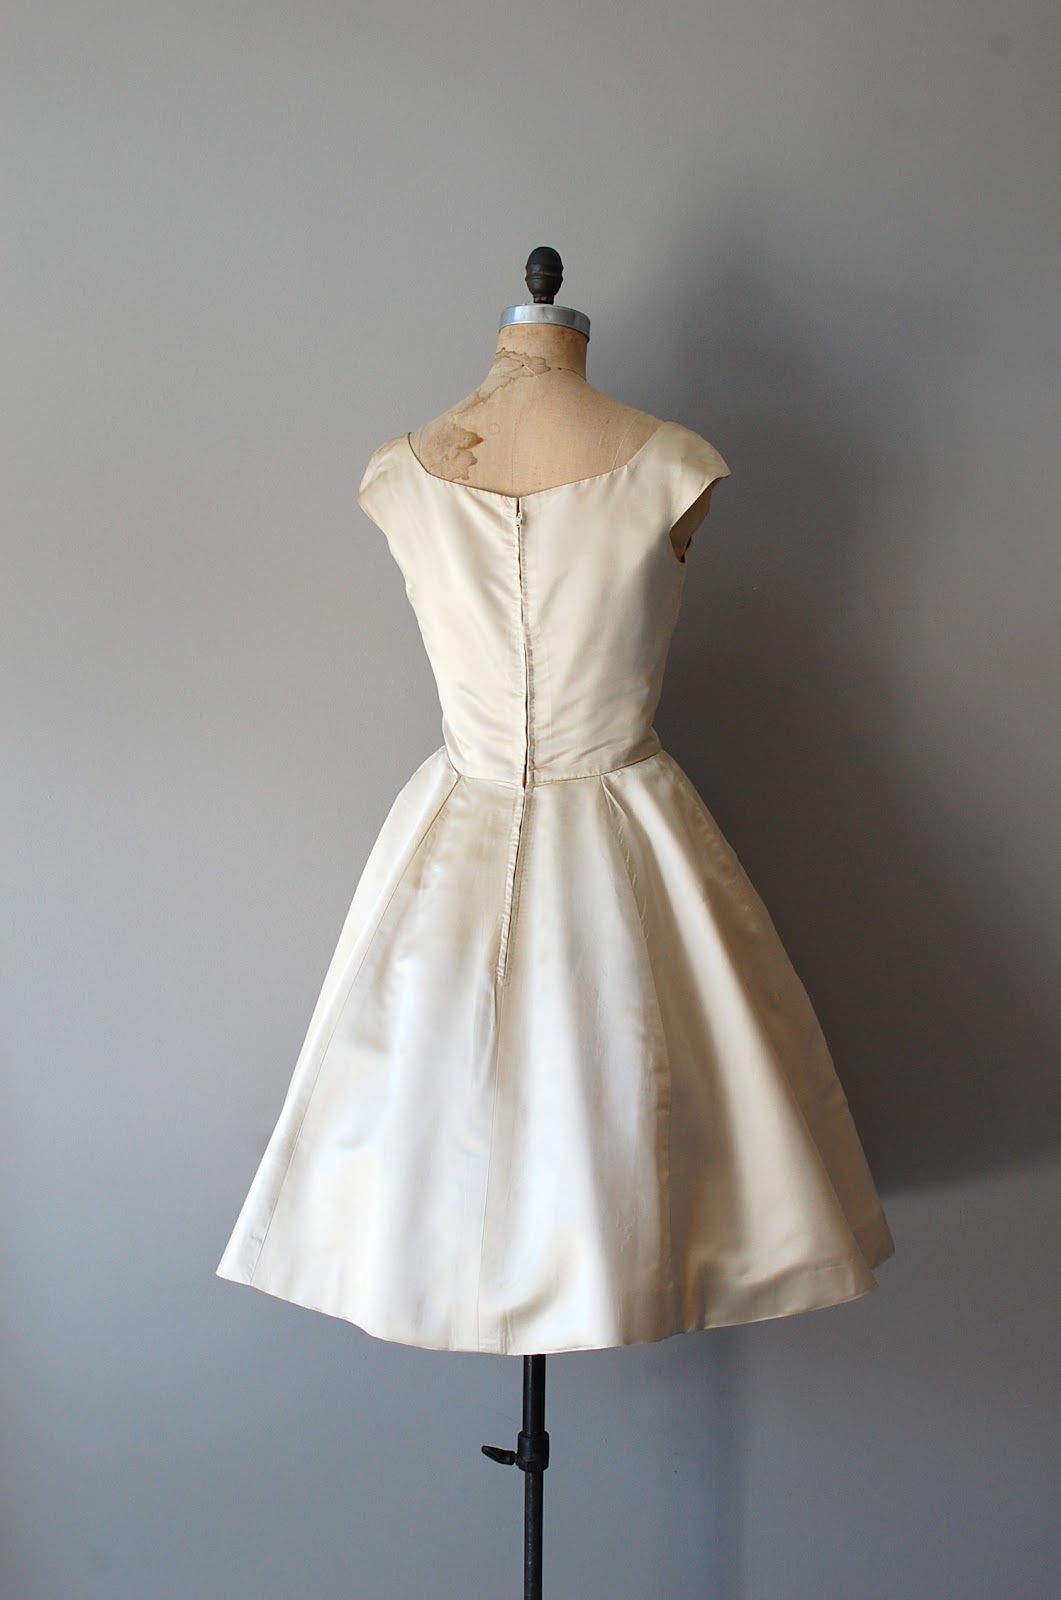 dear golden | vintage: 1950s wedding ♥ An Impossible Dream dress